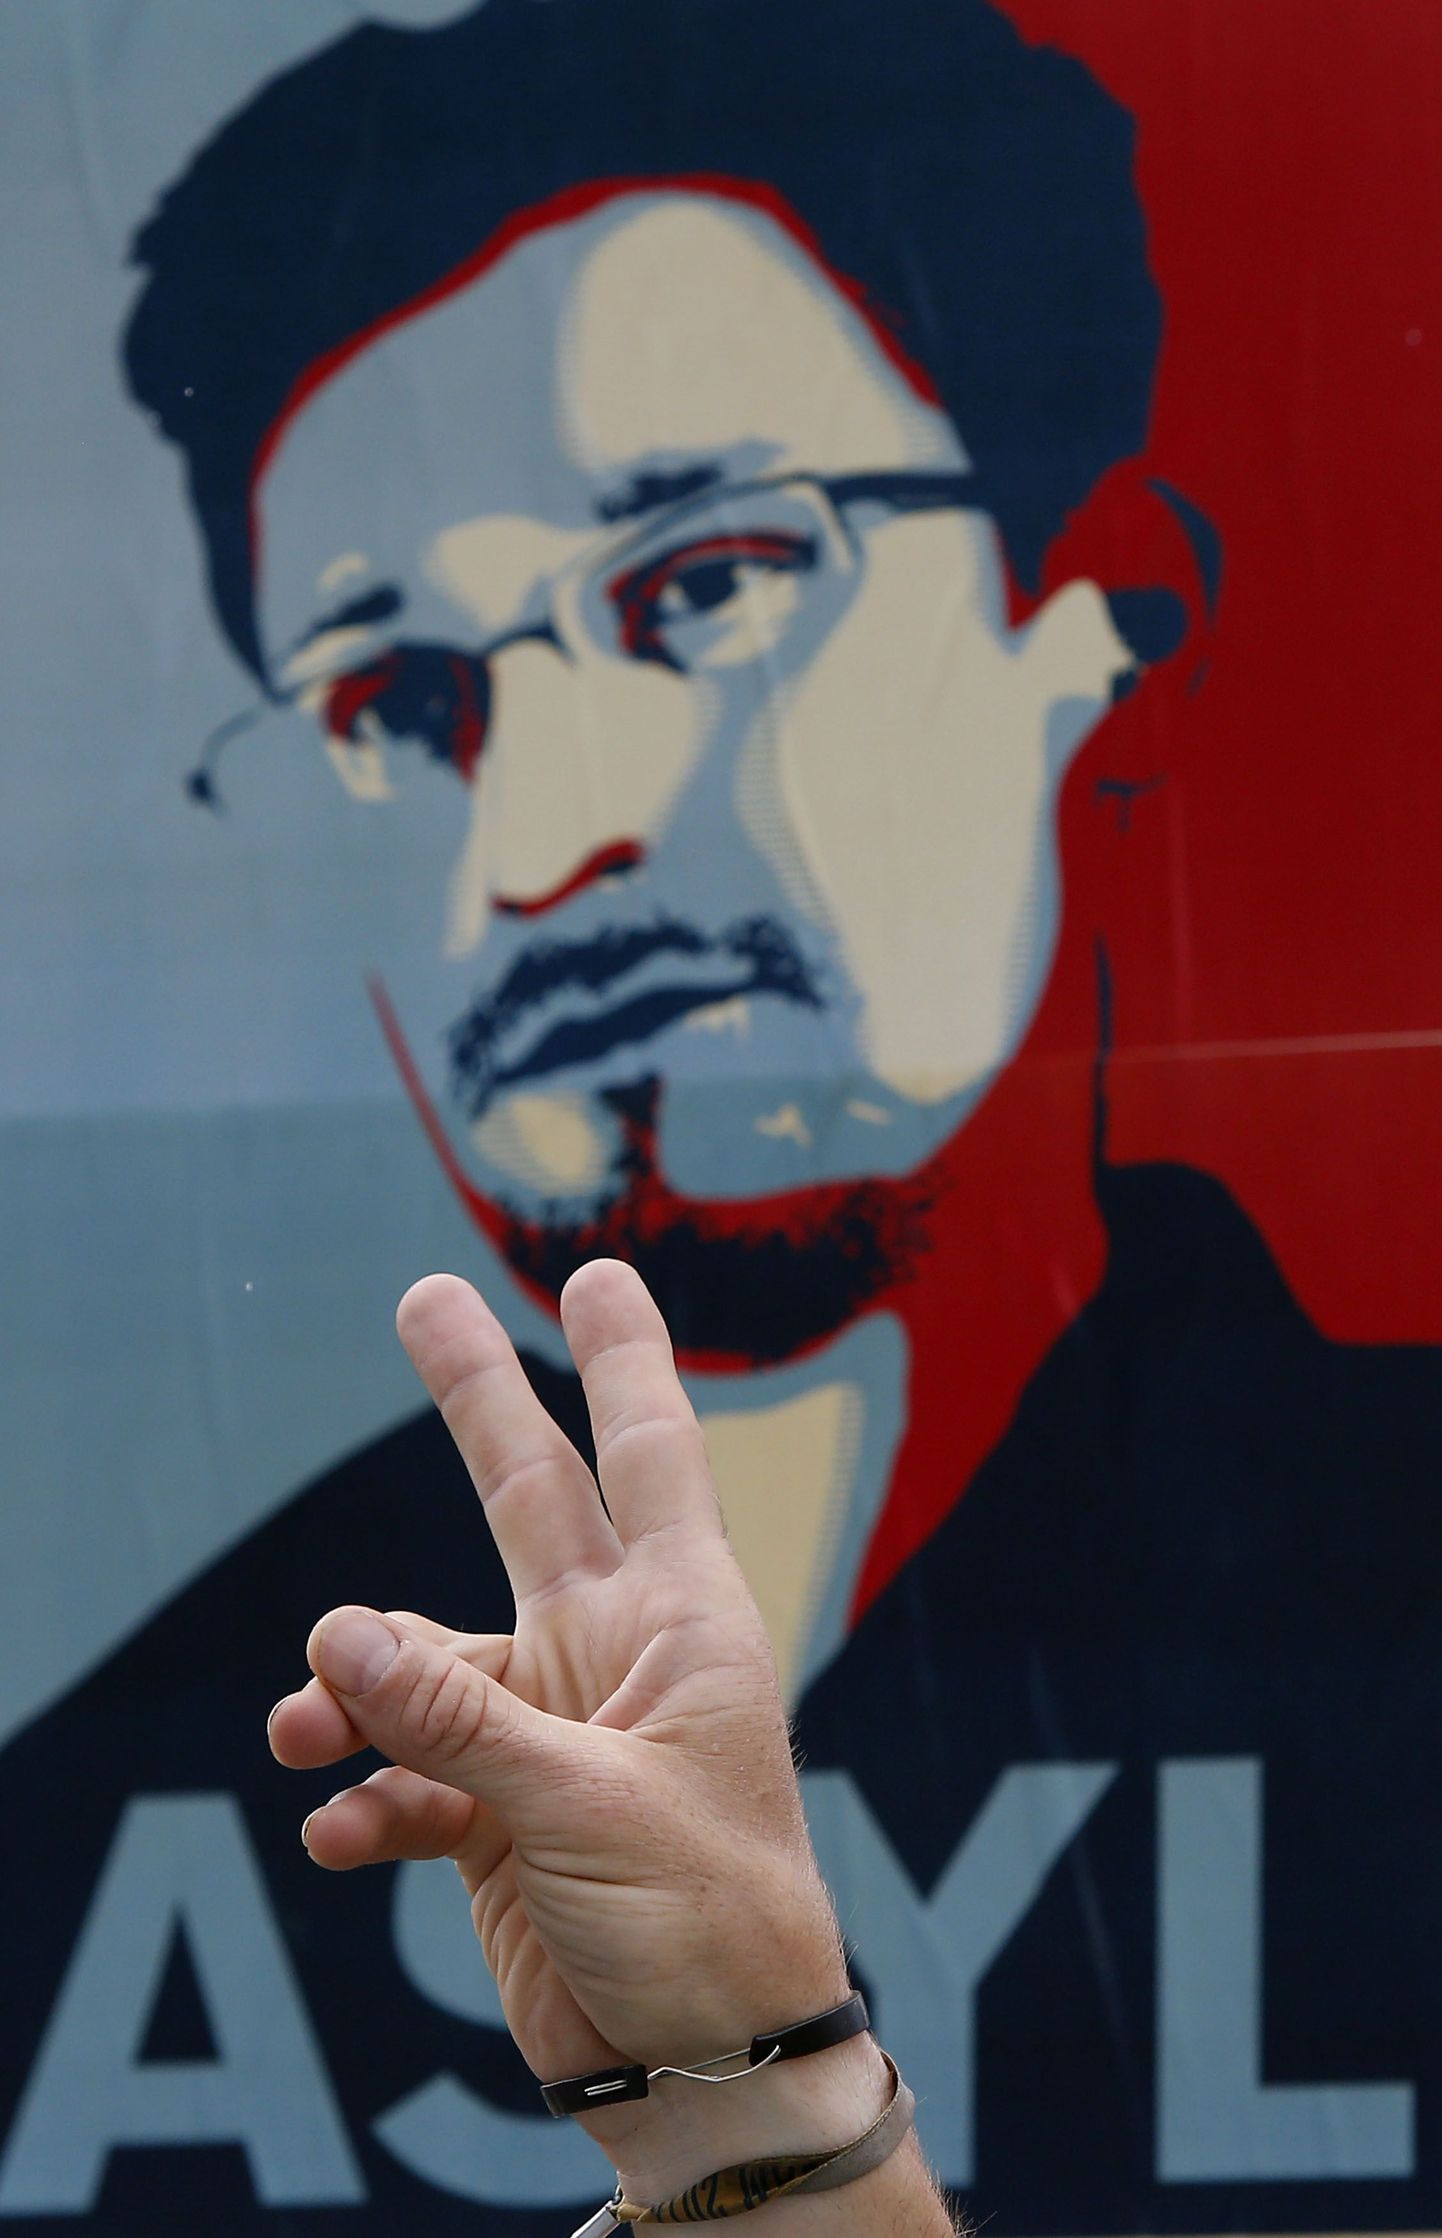 Edward Snowden plakatil